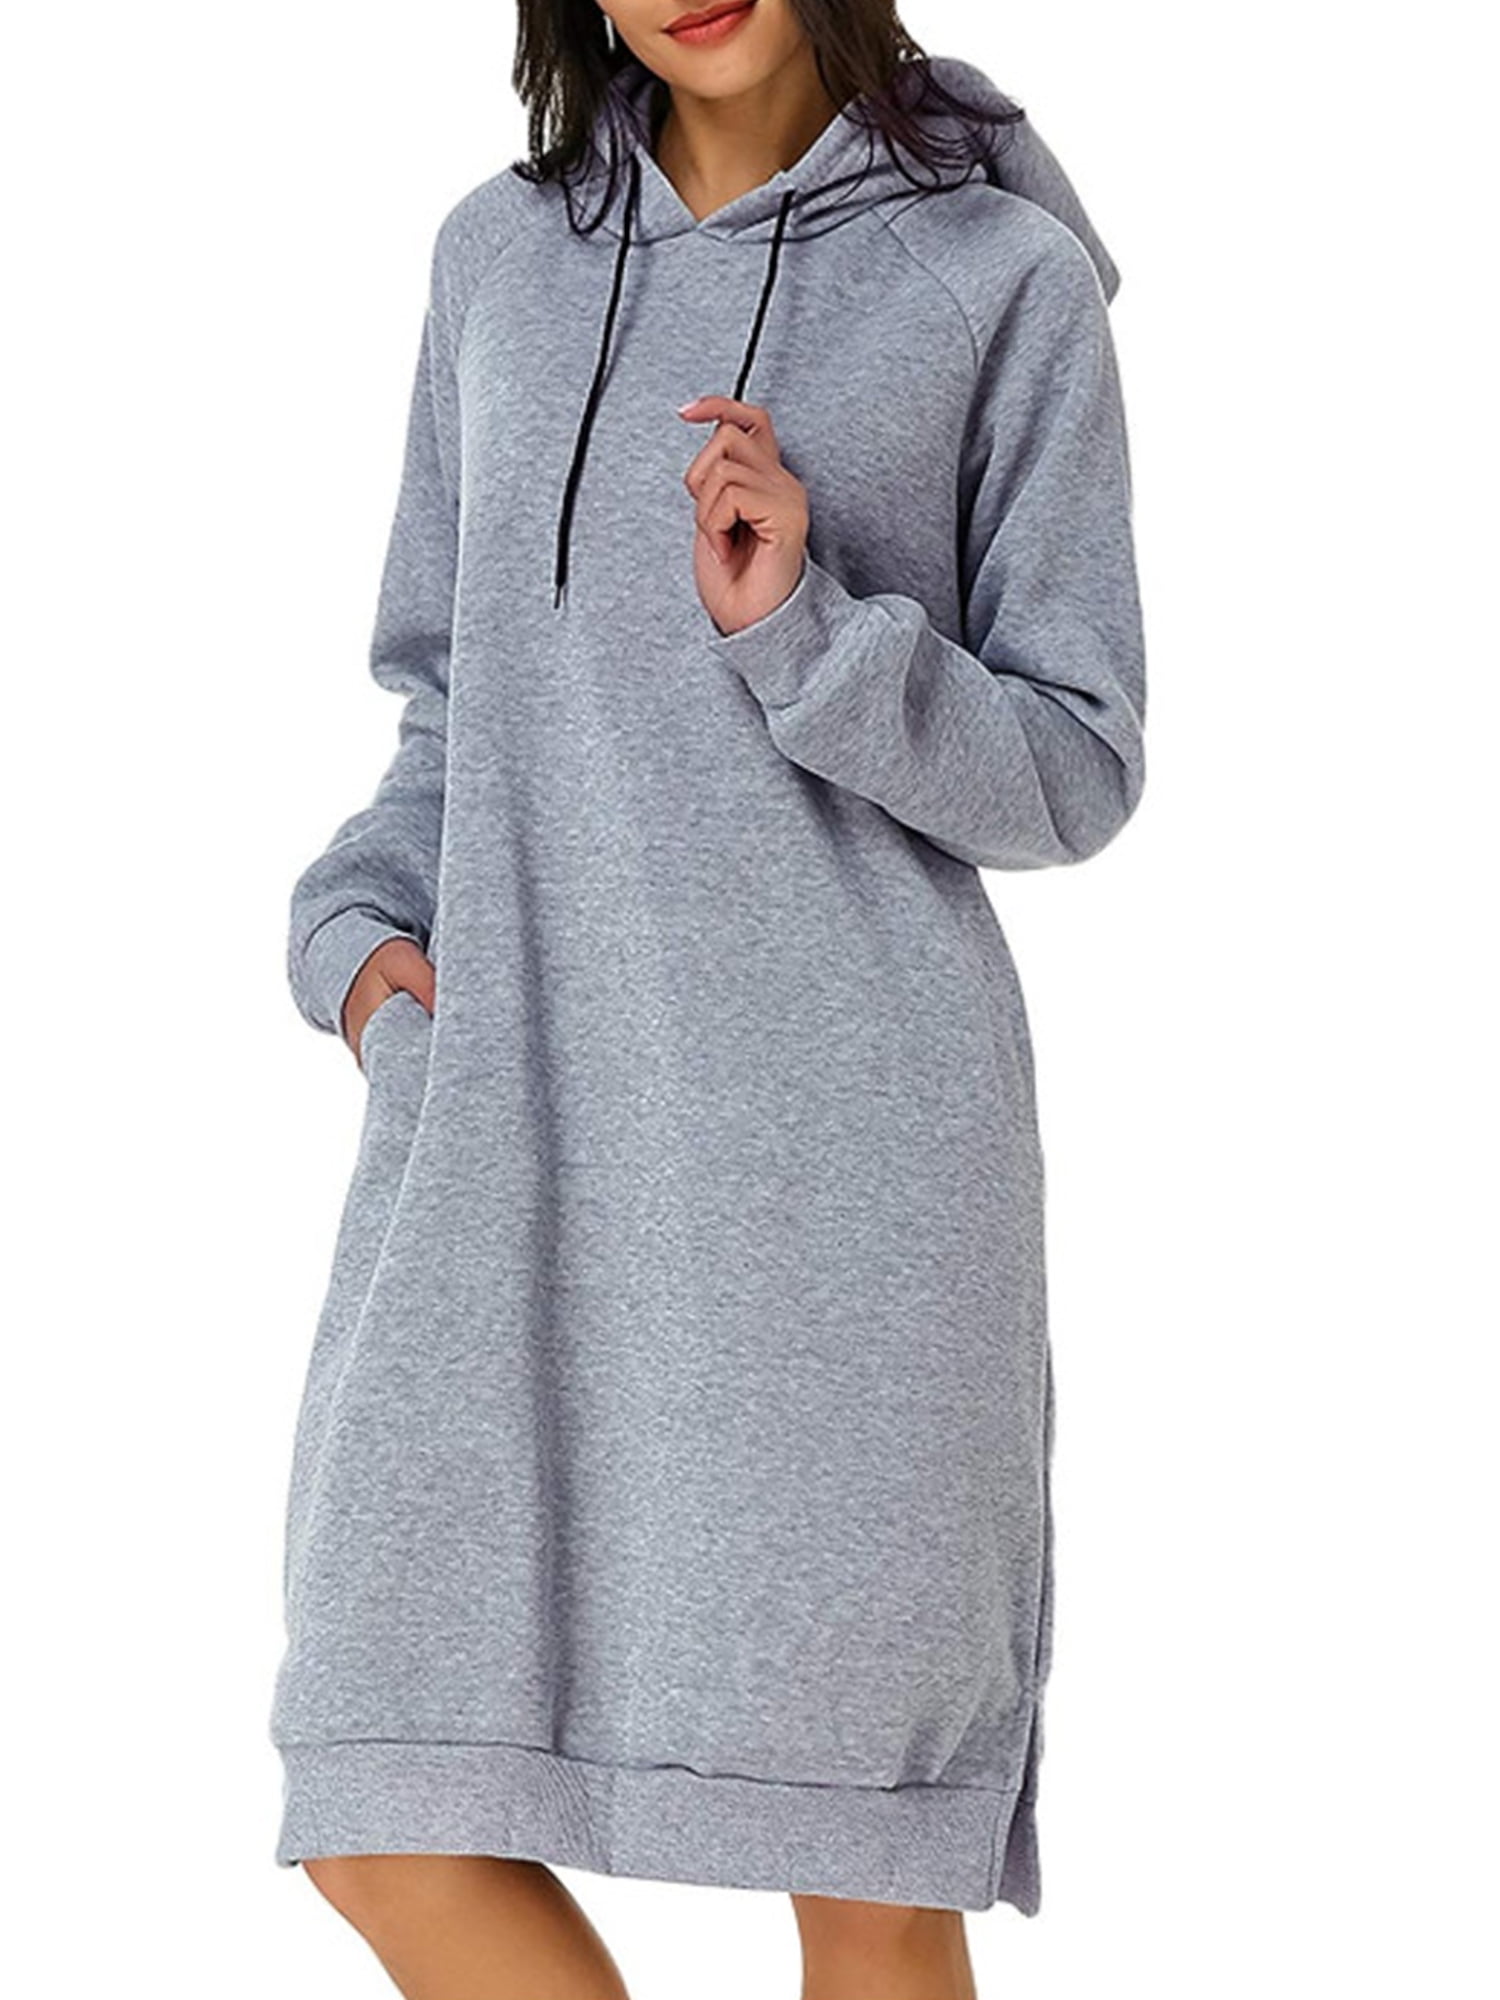 Niuer Women Sweatshirt Dress Solid Color Pullover Hoodie Pocket